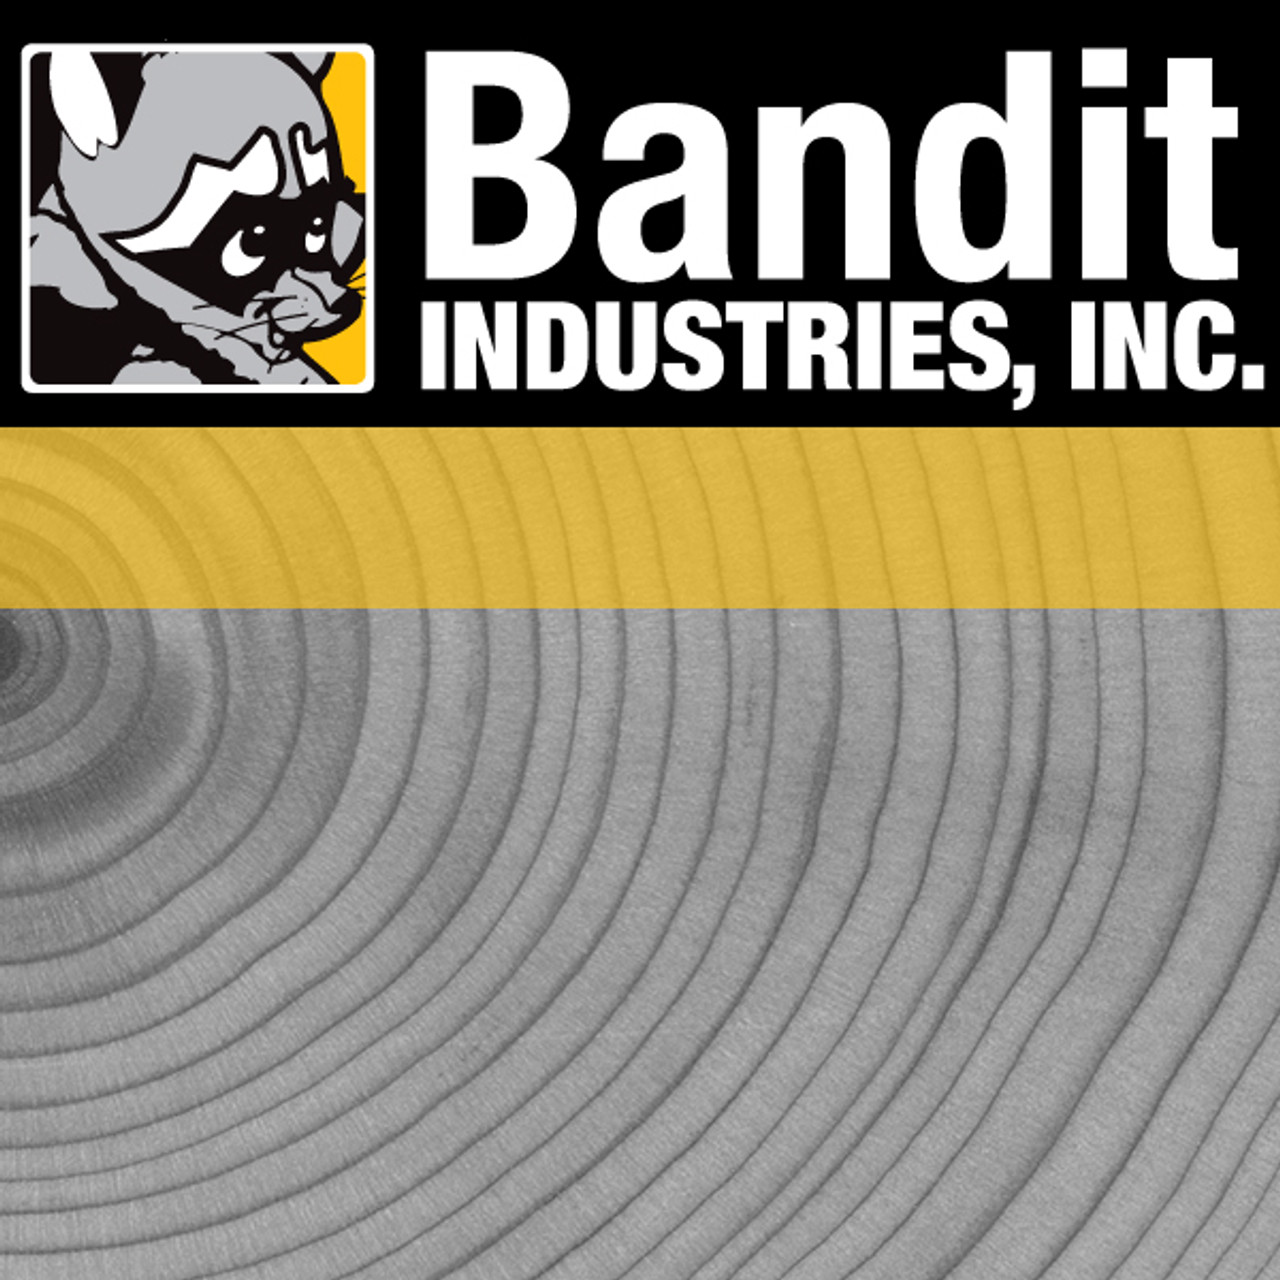 900-4924-54: BANDIT 5/16-18 X 1/2"" GRADE 5 SERRATED FLANGE BOLT PLT.